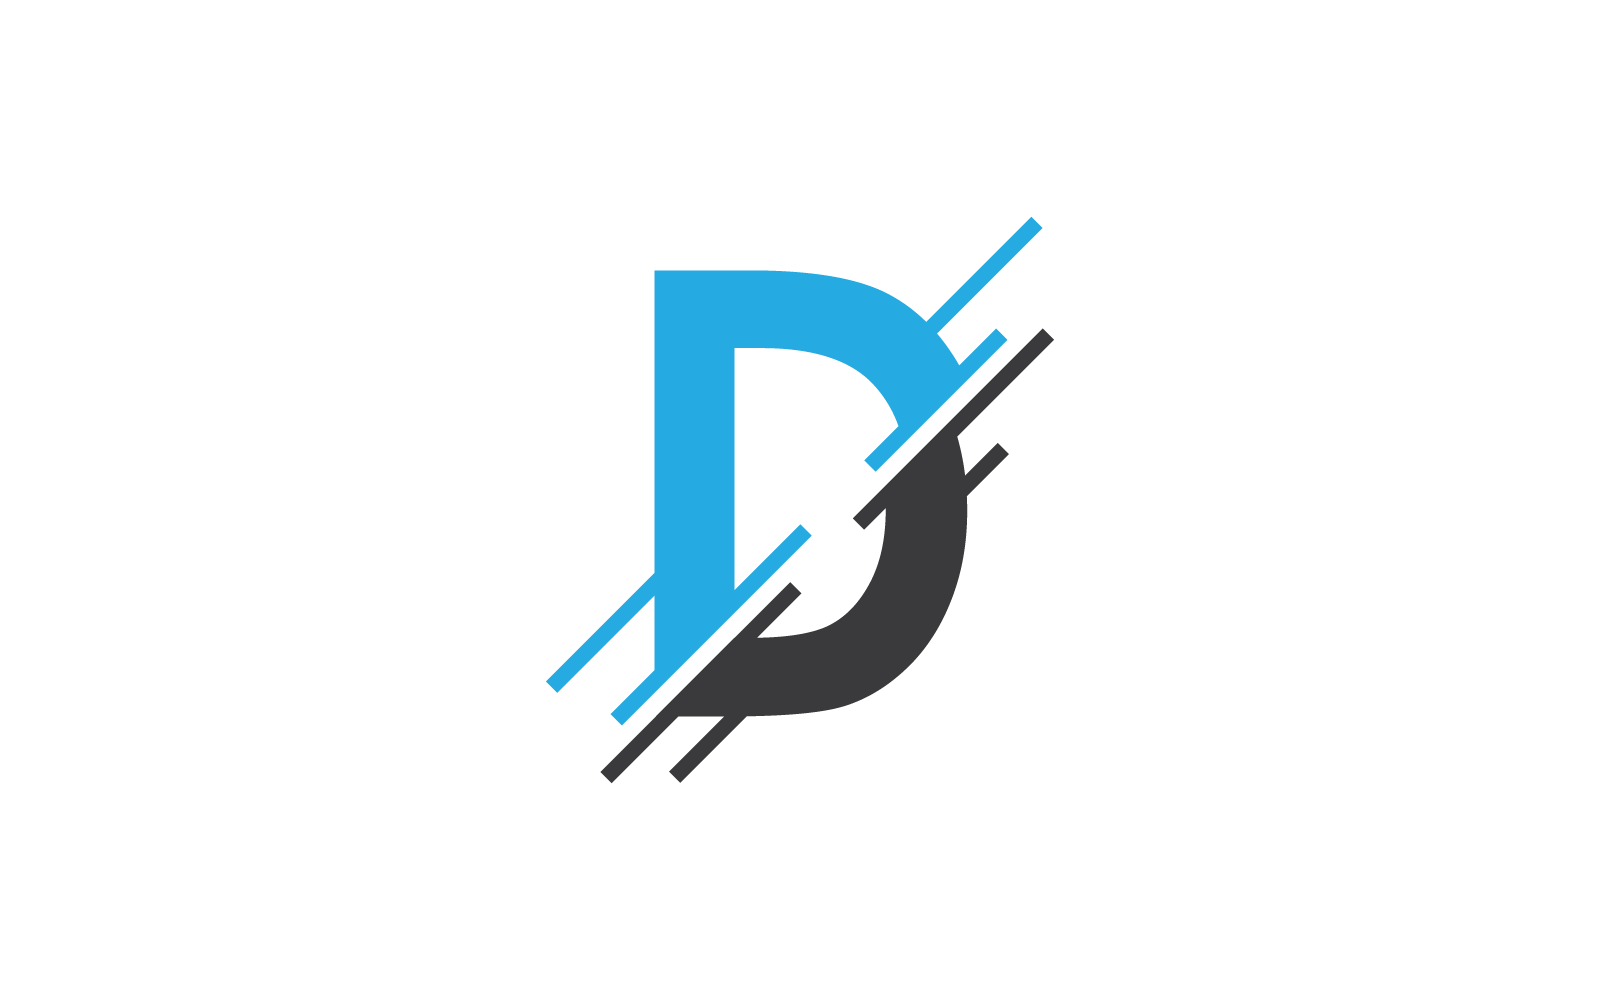 D letter logo illustration vector design